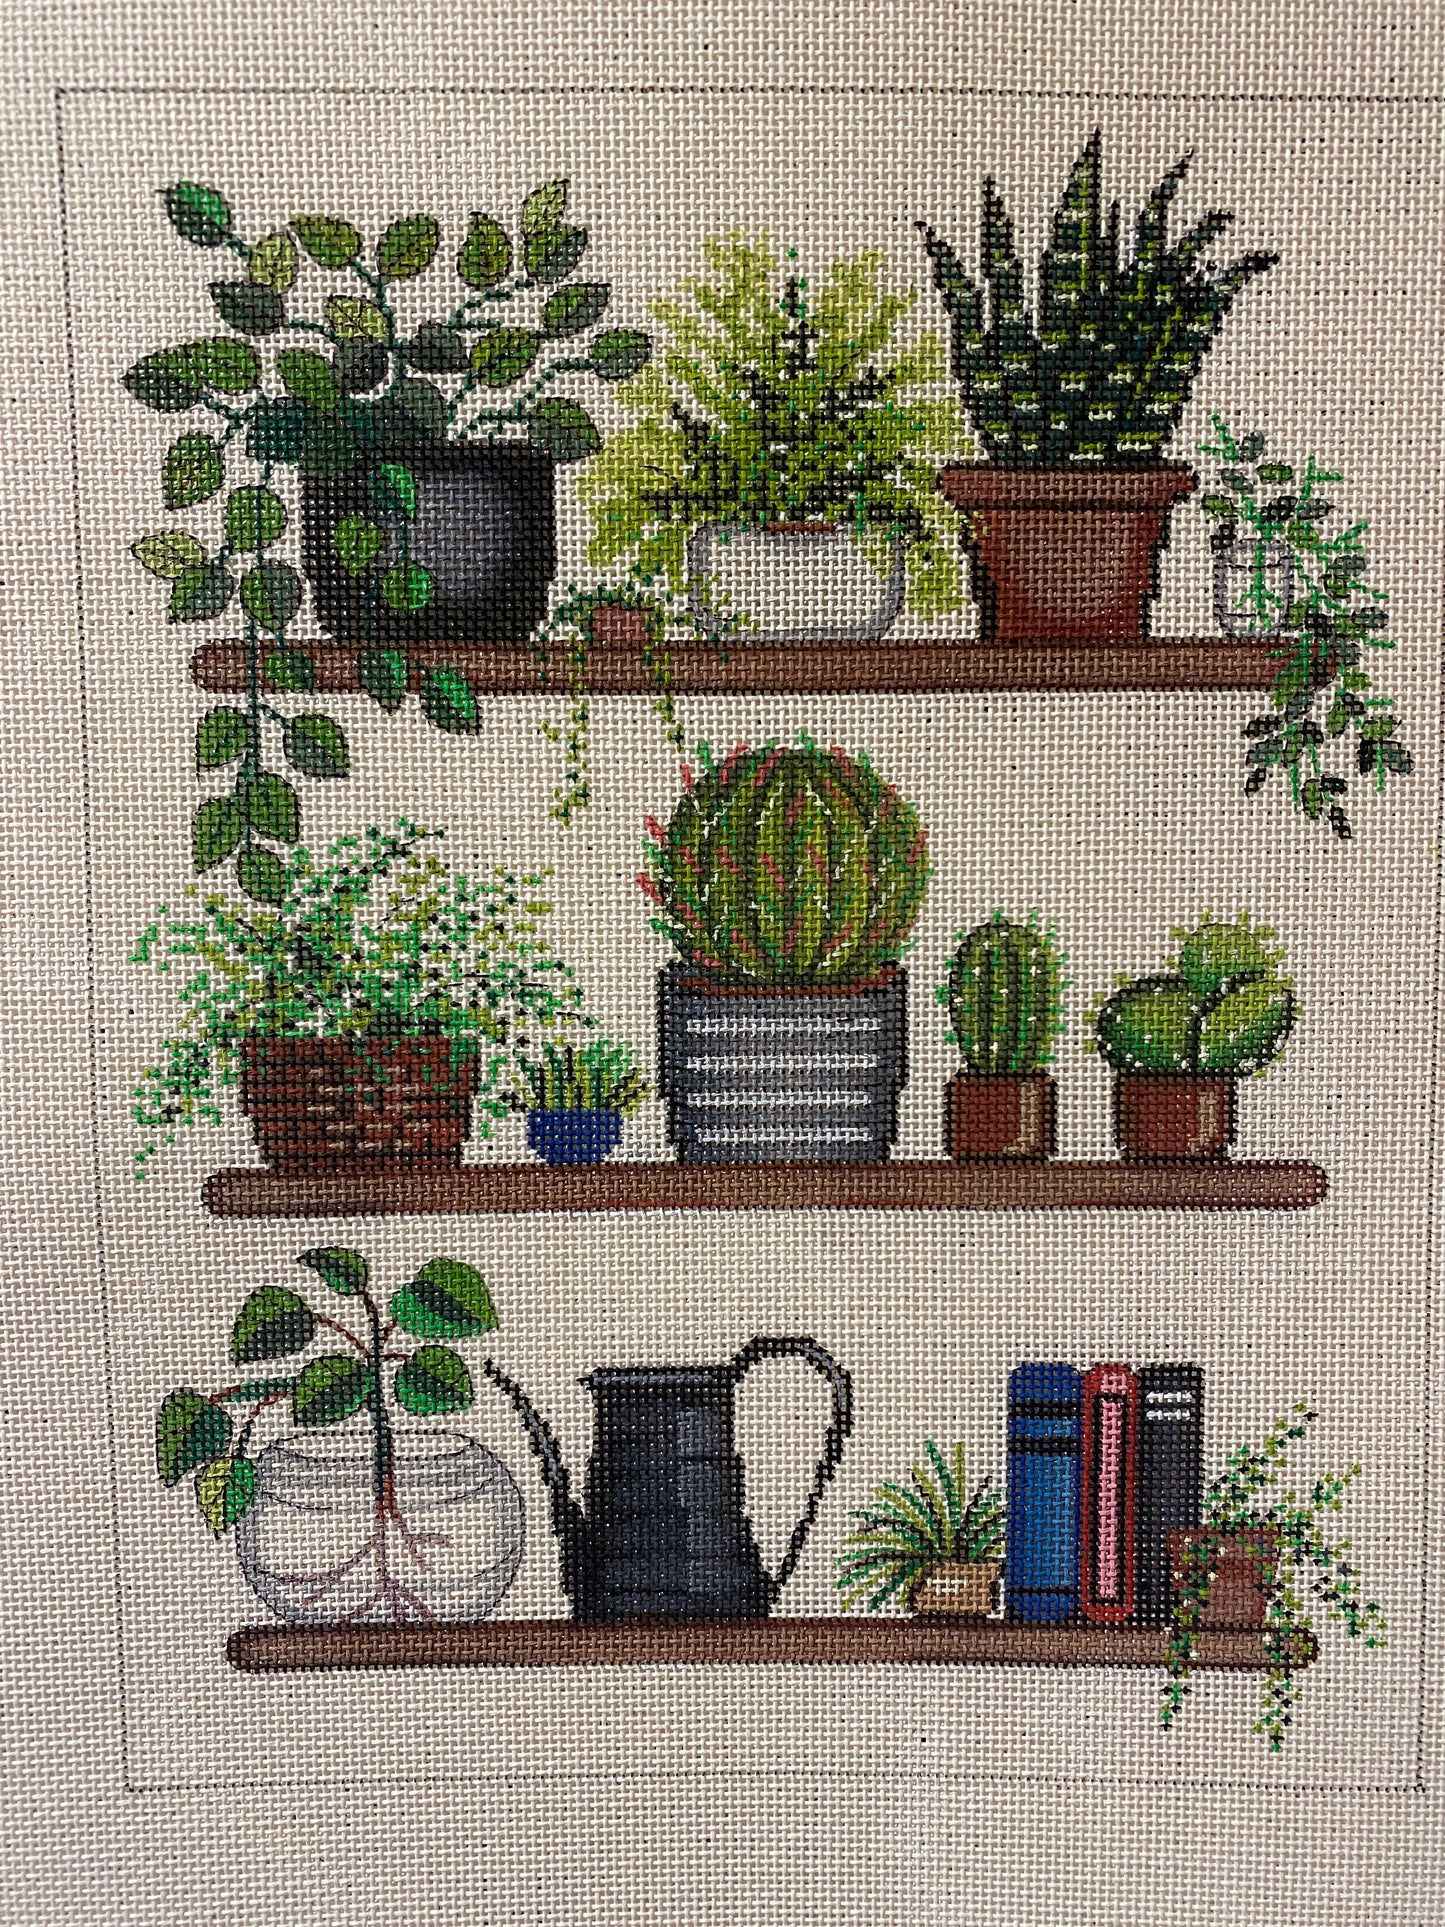 Plants on Shelves